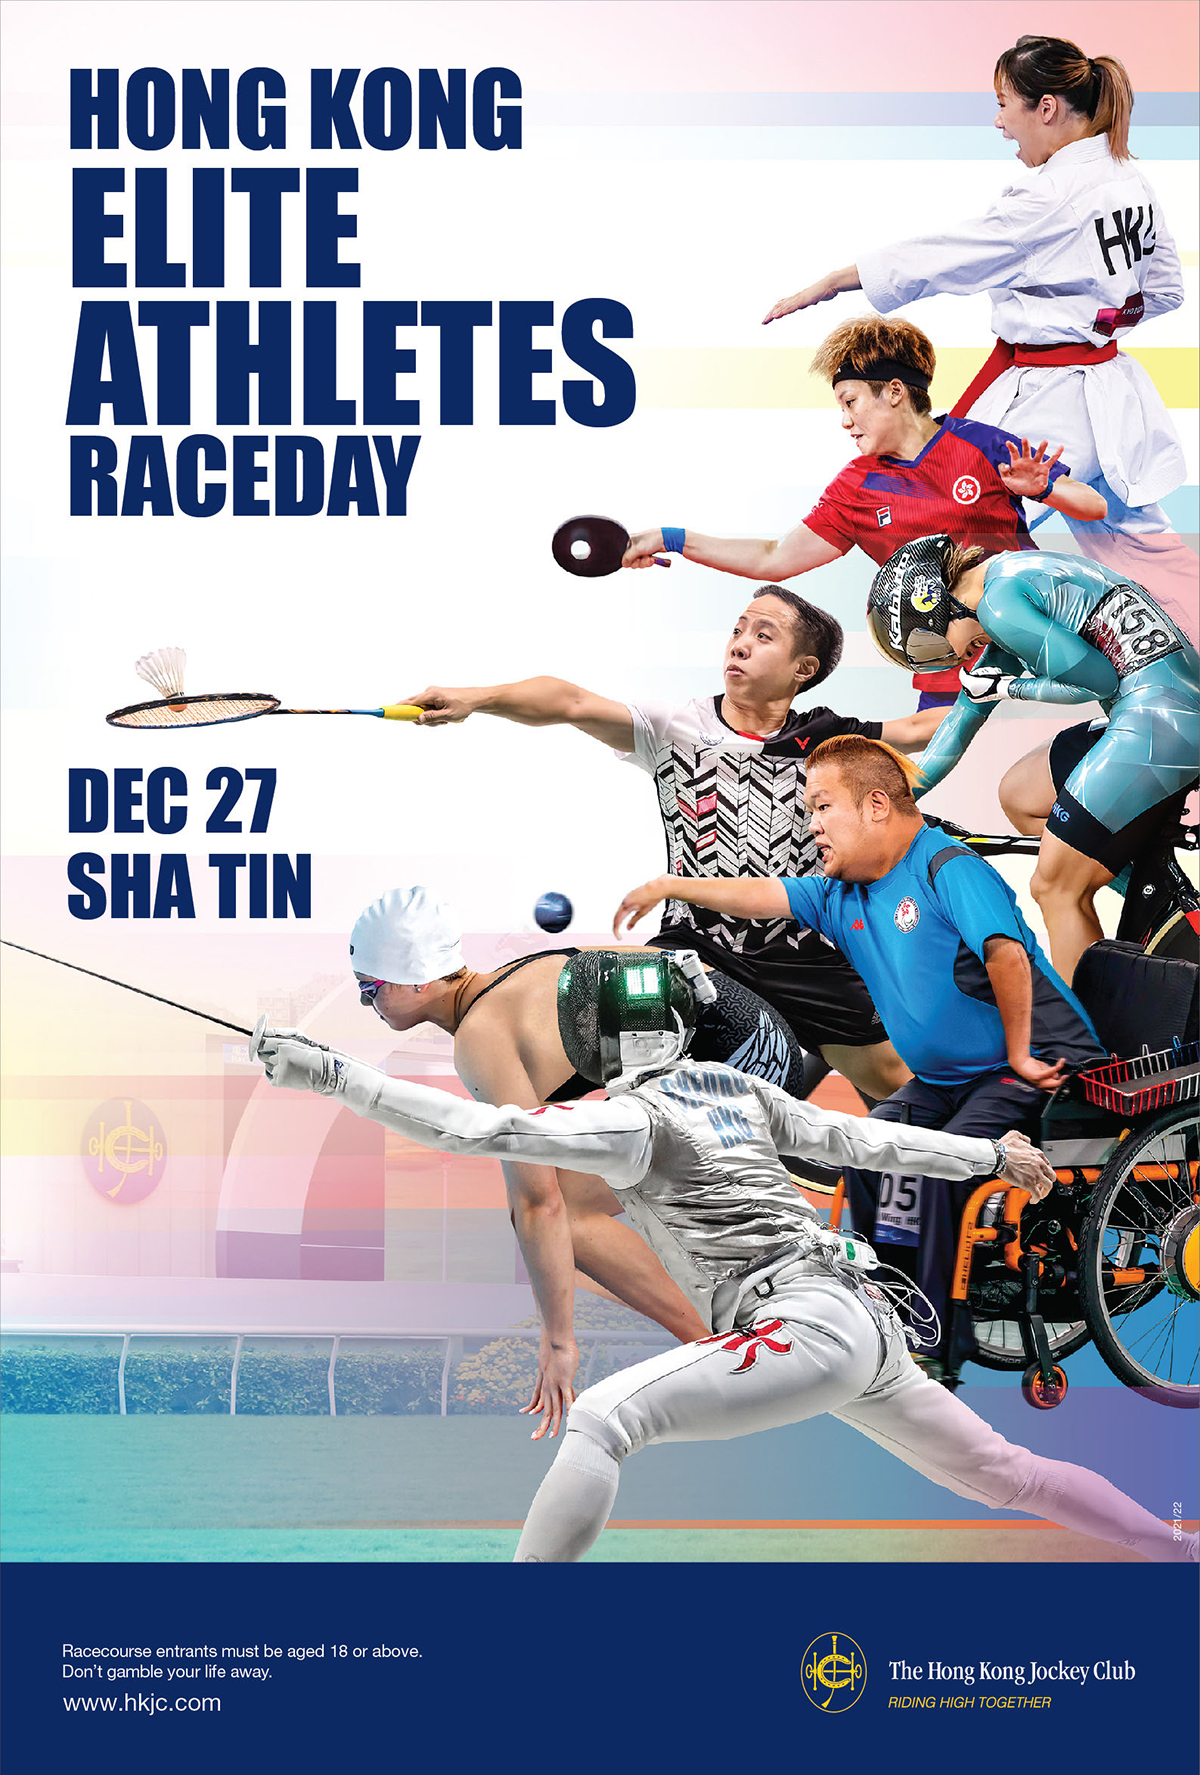 The Hong Kong Jockey Club will stage the Hong Kong Elite Athletes Raceday on 27 December (Monday) at Sha Tin Racecourse.